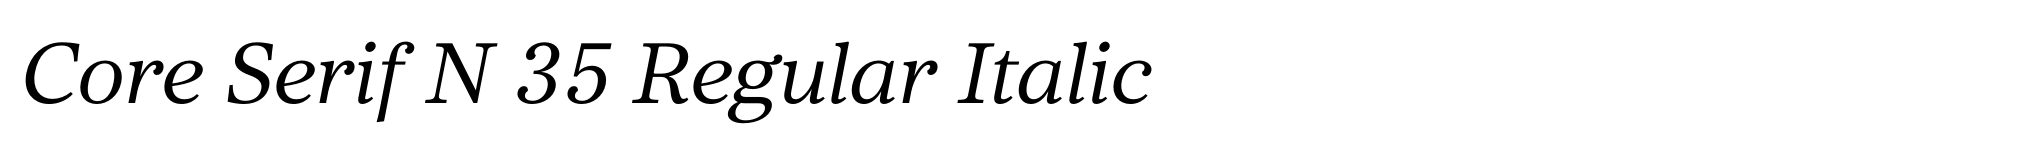 Core Serif N 35 Regular Italic image